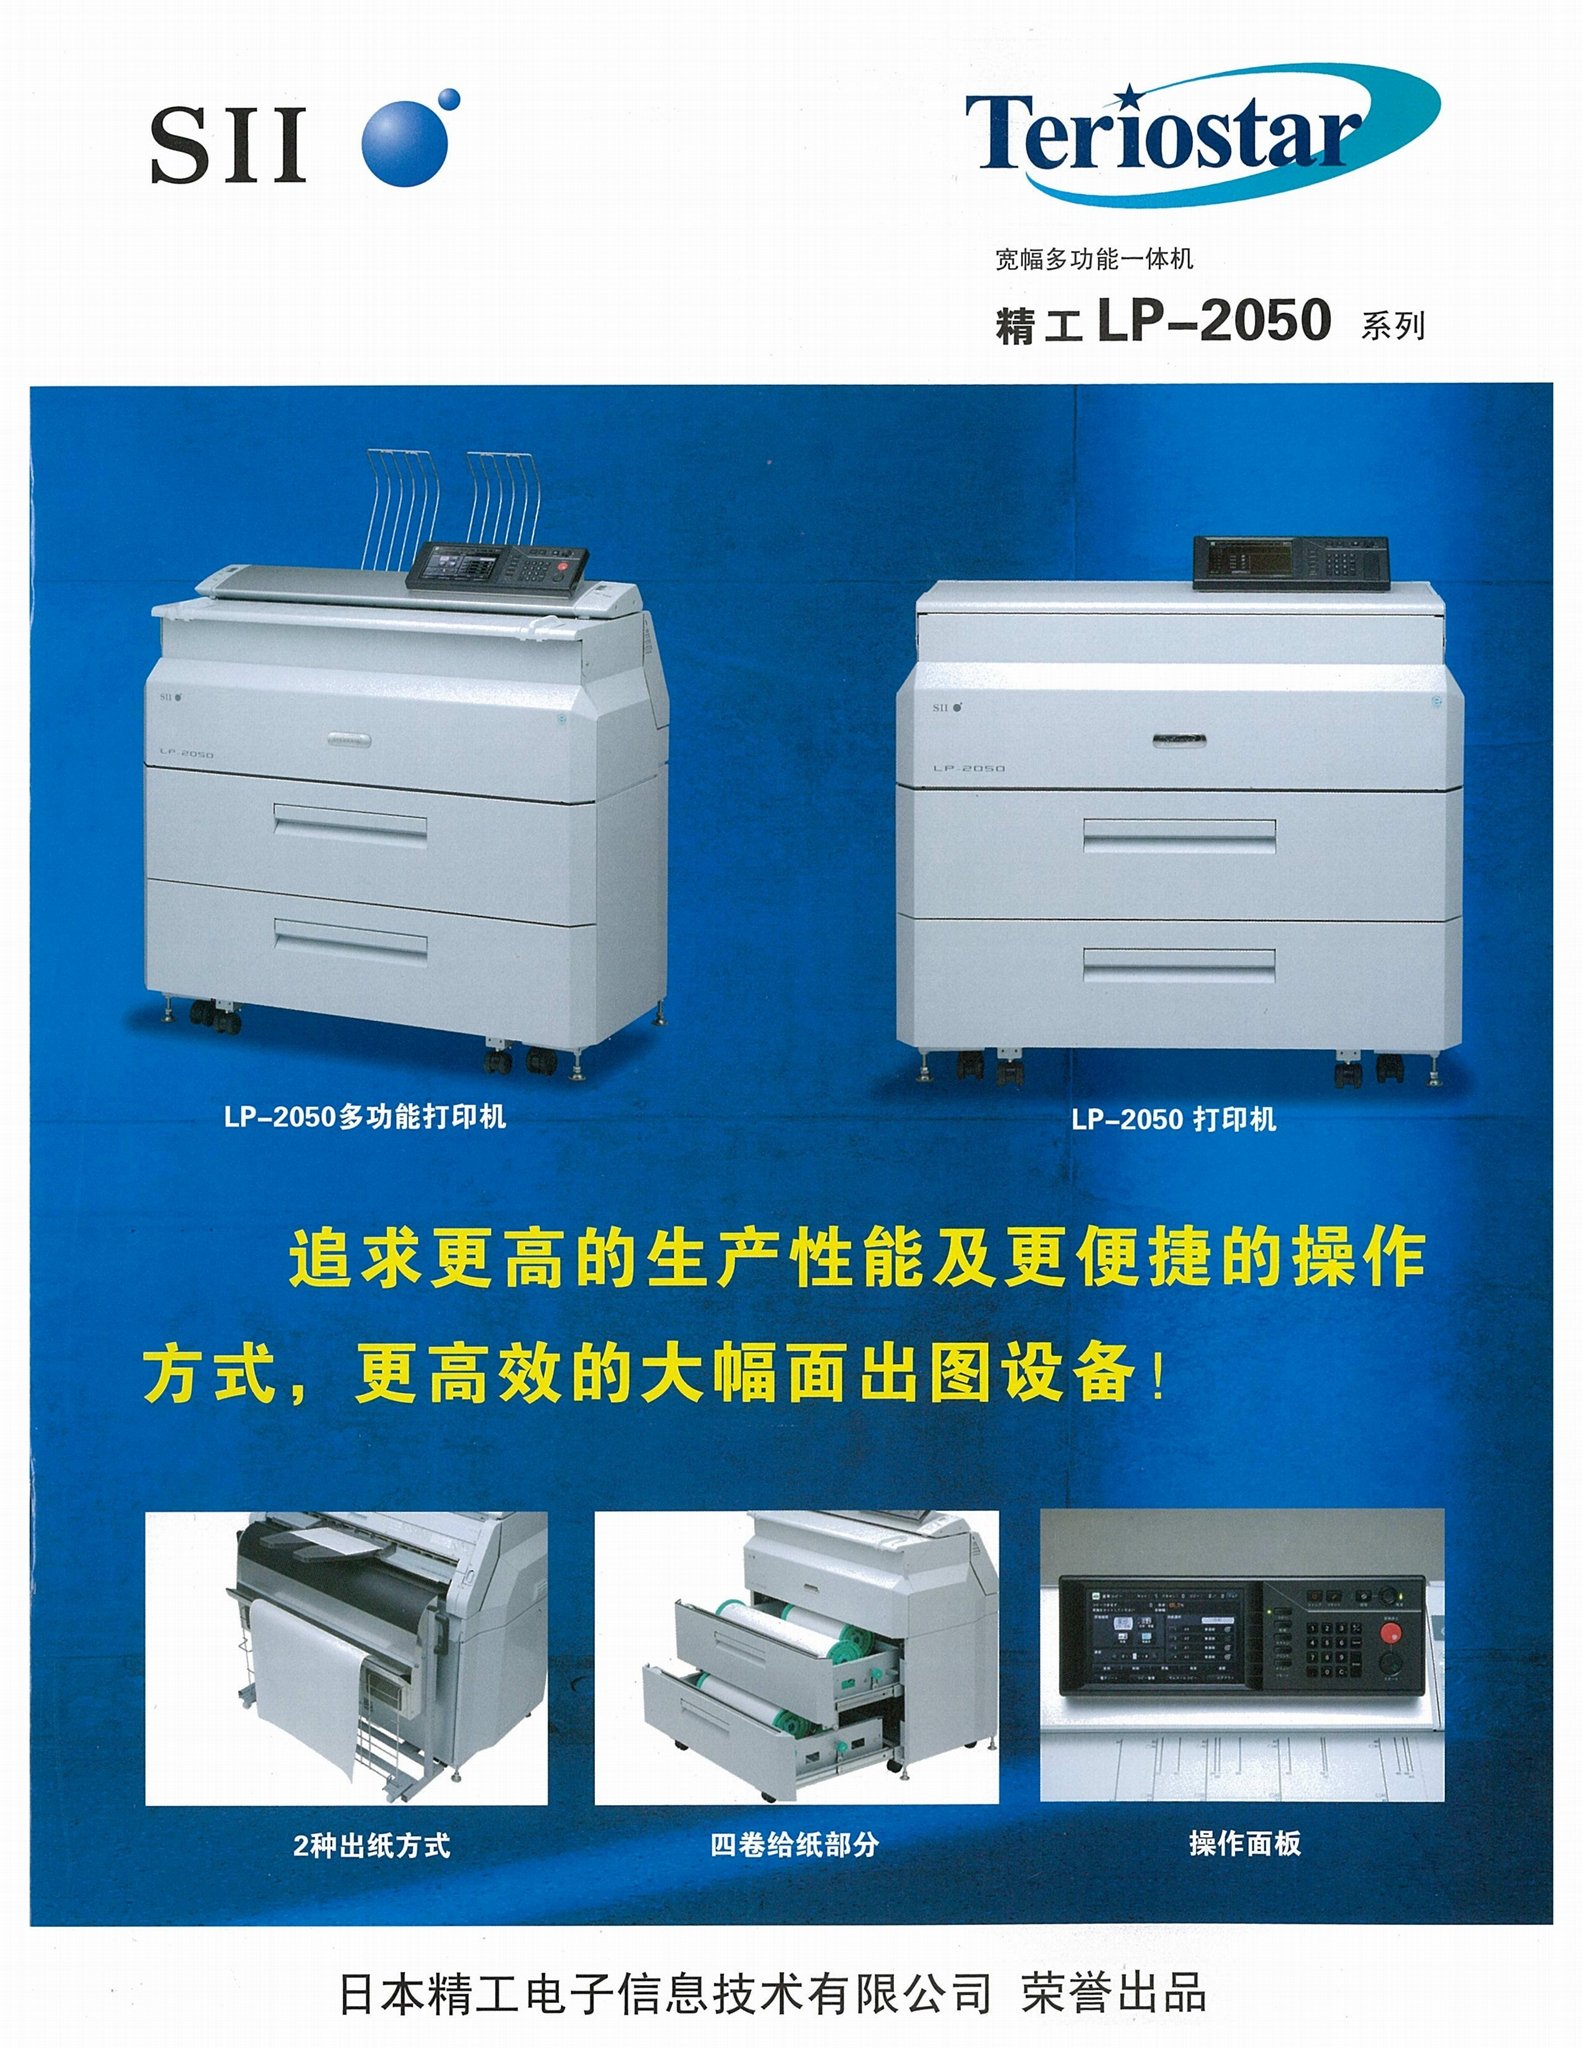 OKI高配置工程机/蓝图机 LP-2060 3